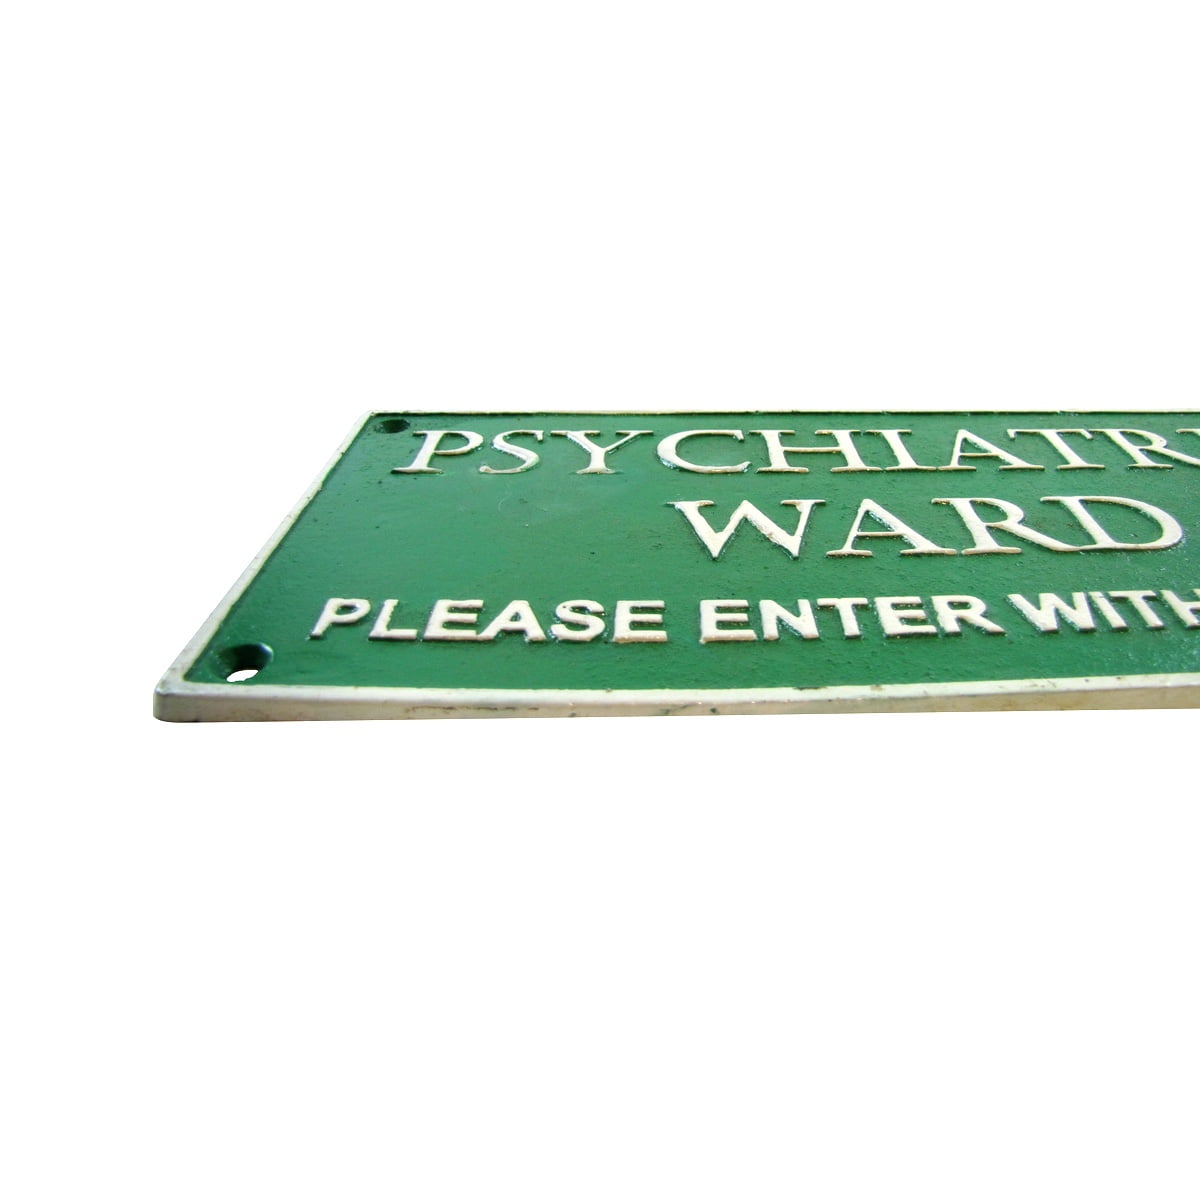 Psychiatric Ward Enter With Caution Sign Plaque Cast Iron Door Mental Hospital